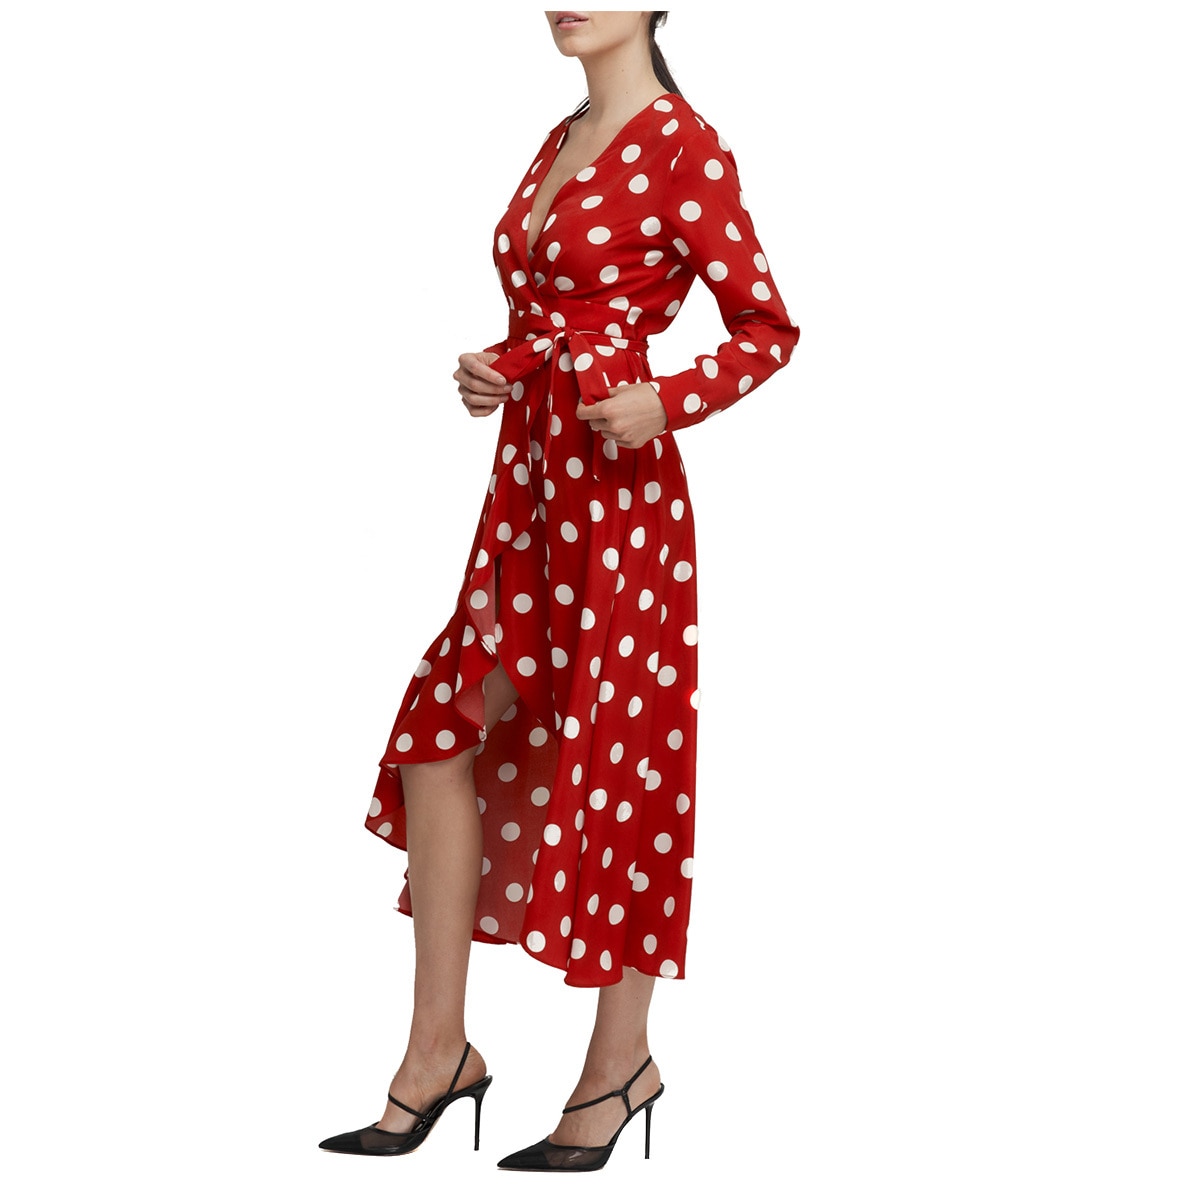 Cooper St Women's Wrap Dress - Red/White